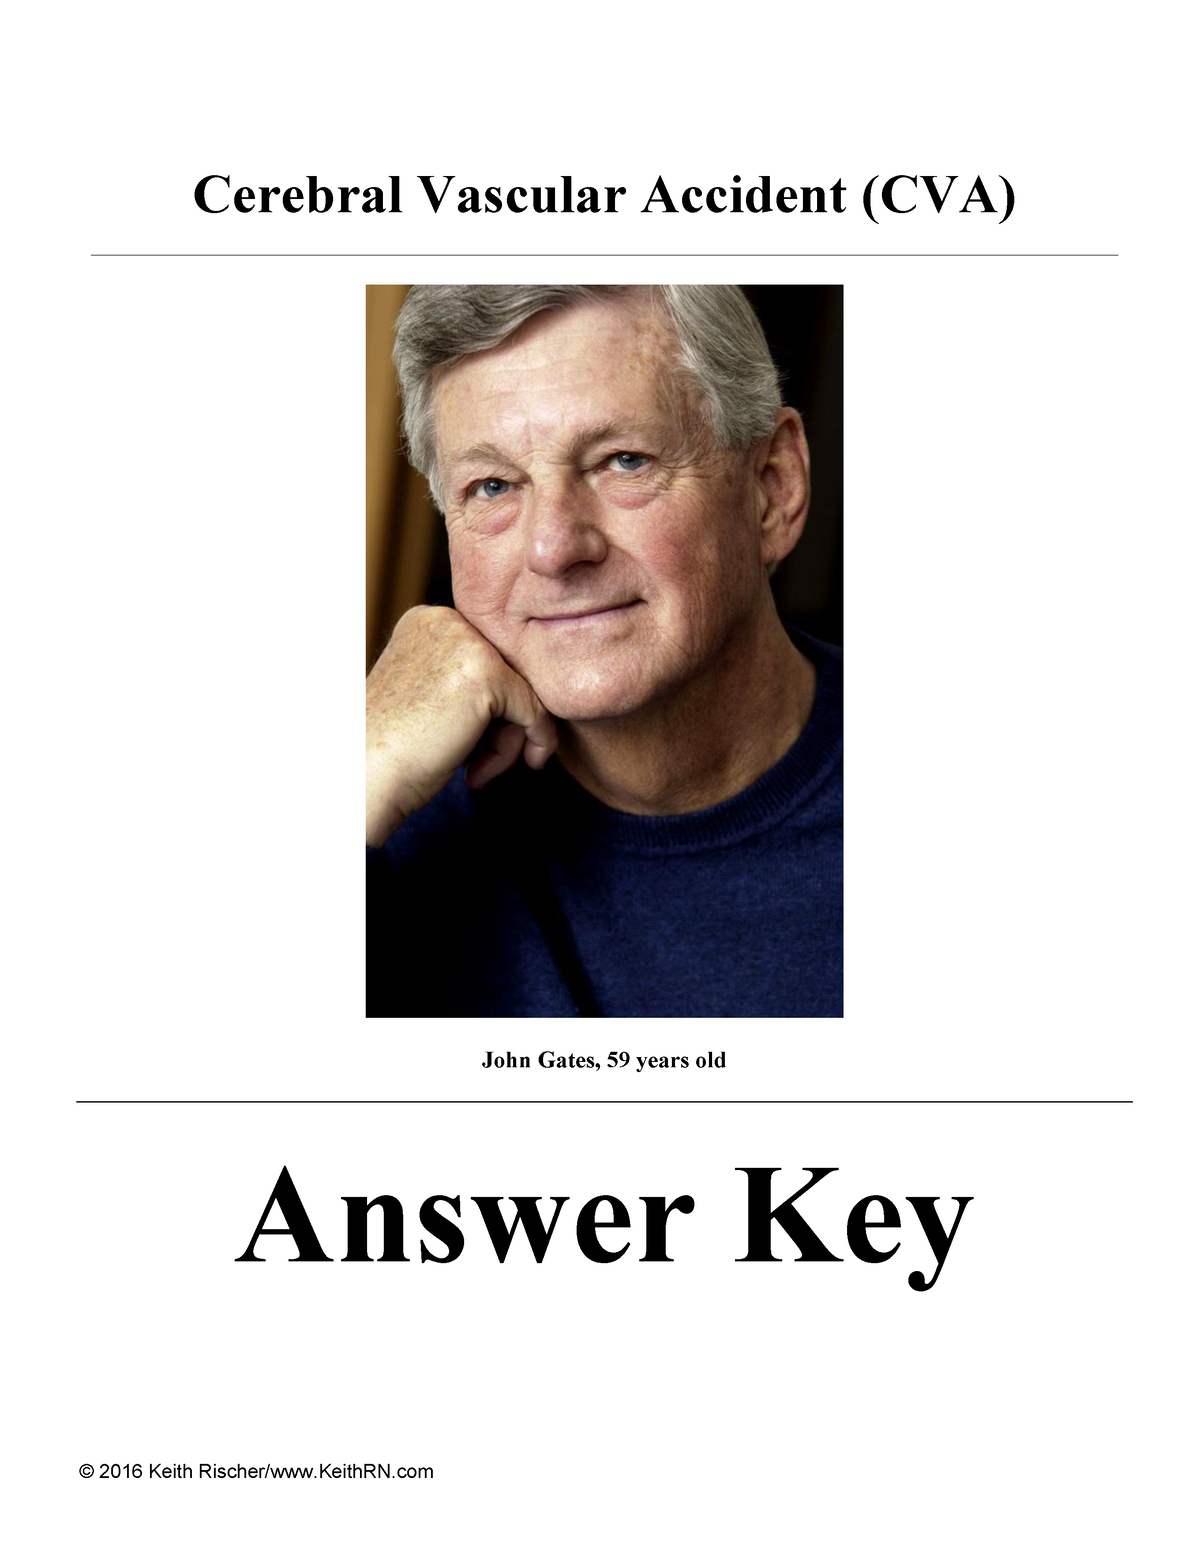 Answer KEY CVA Rapid Reasoning Cerebral Vascular Accident CVA John 